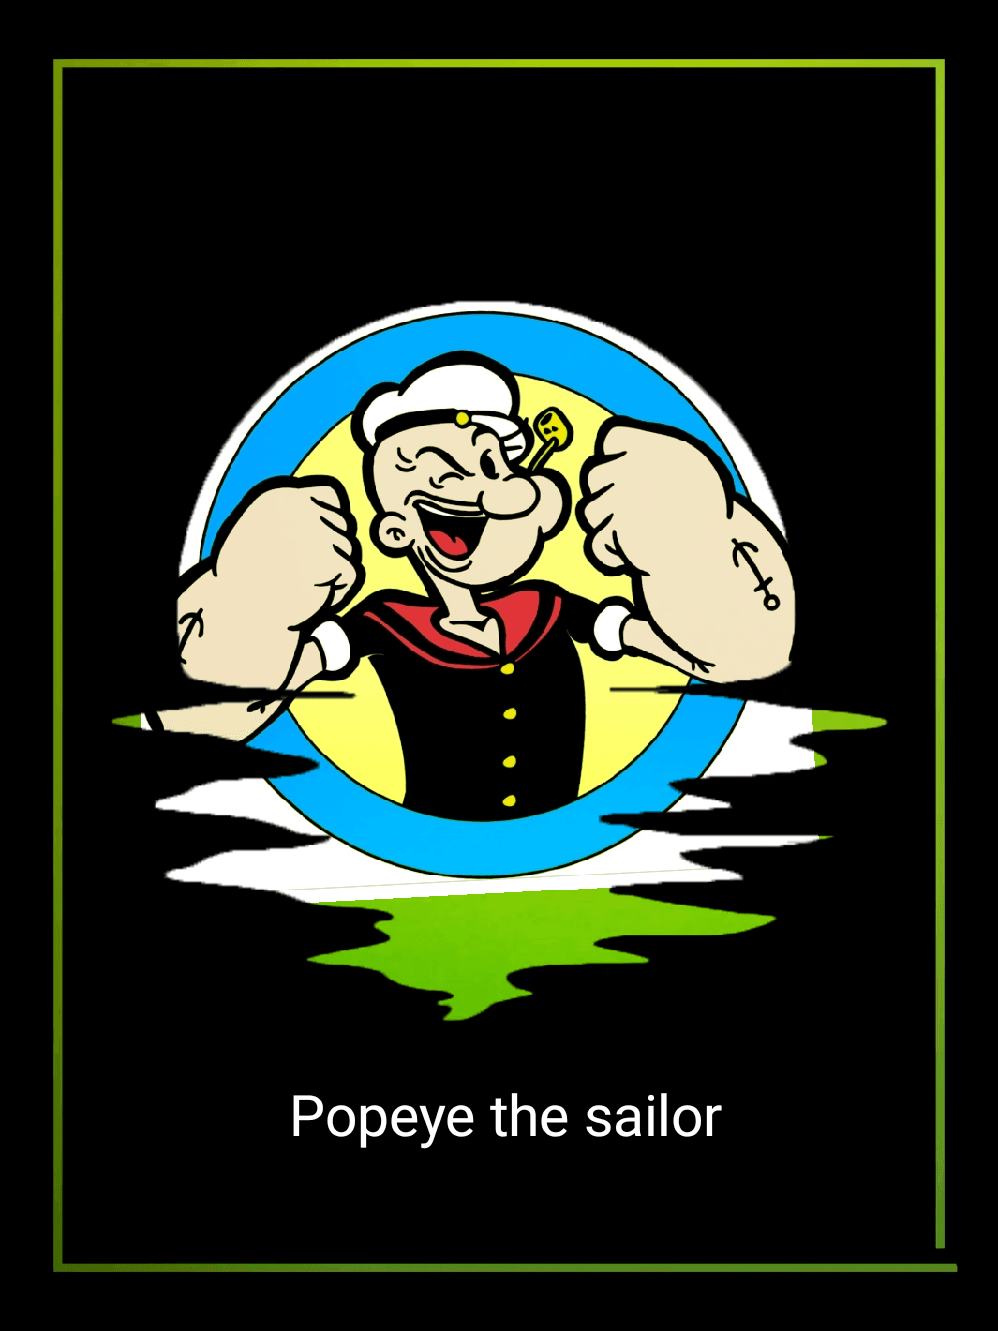 Popeye the sailor